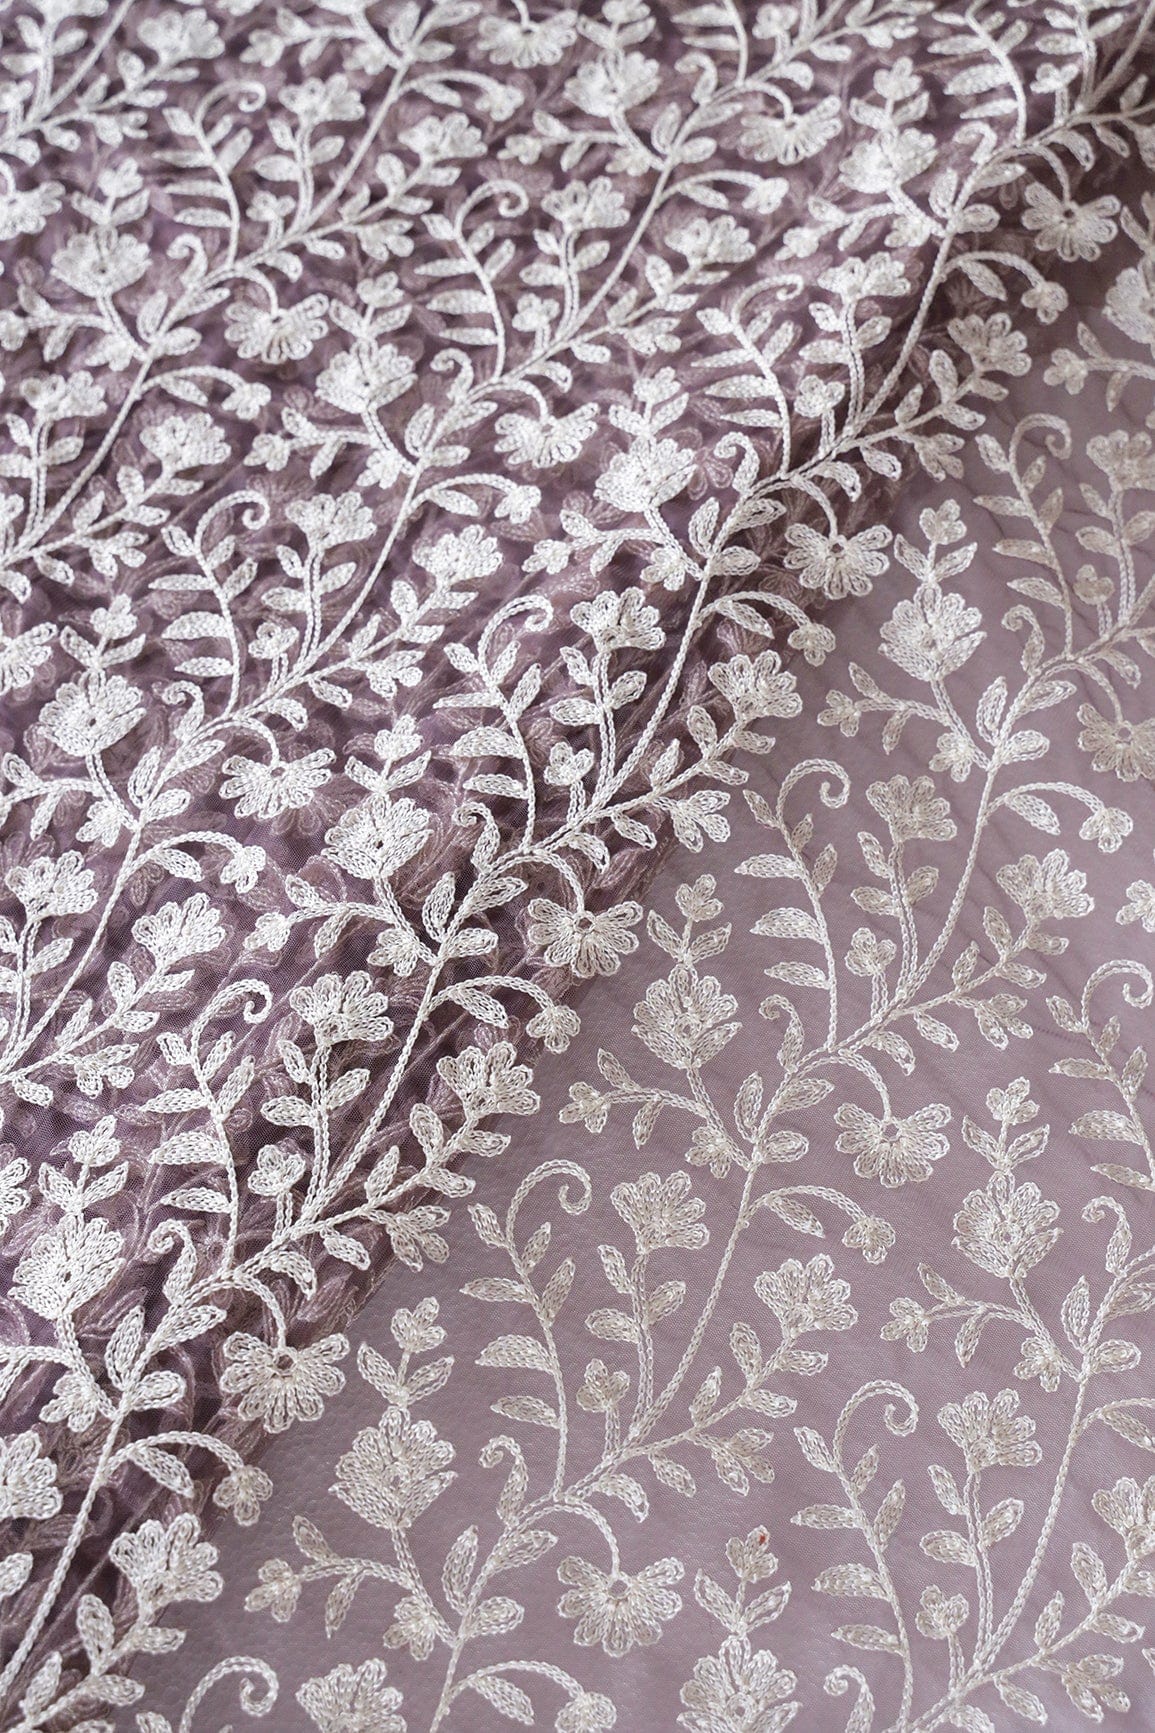 doeraa Embroidery Fabrics Beautiful White Thread Floral Embroidery On Voila Purple Soft Net Fabric